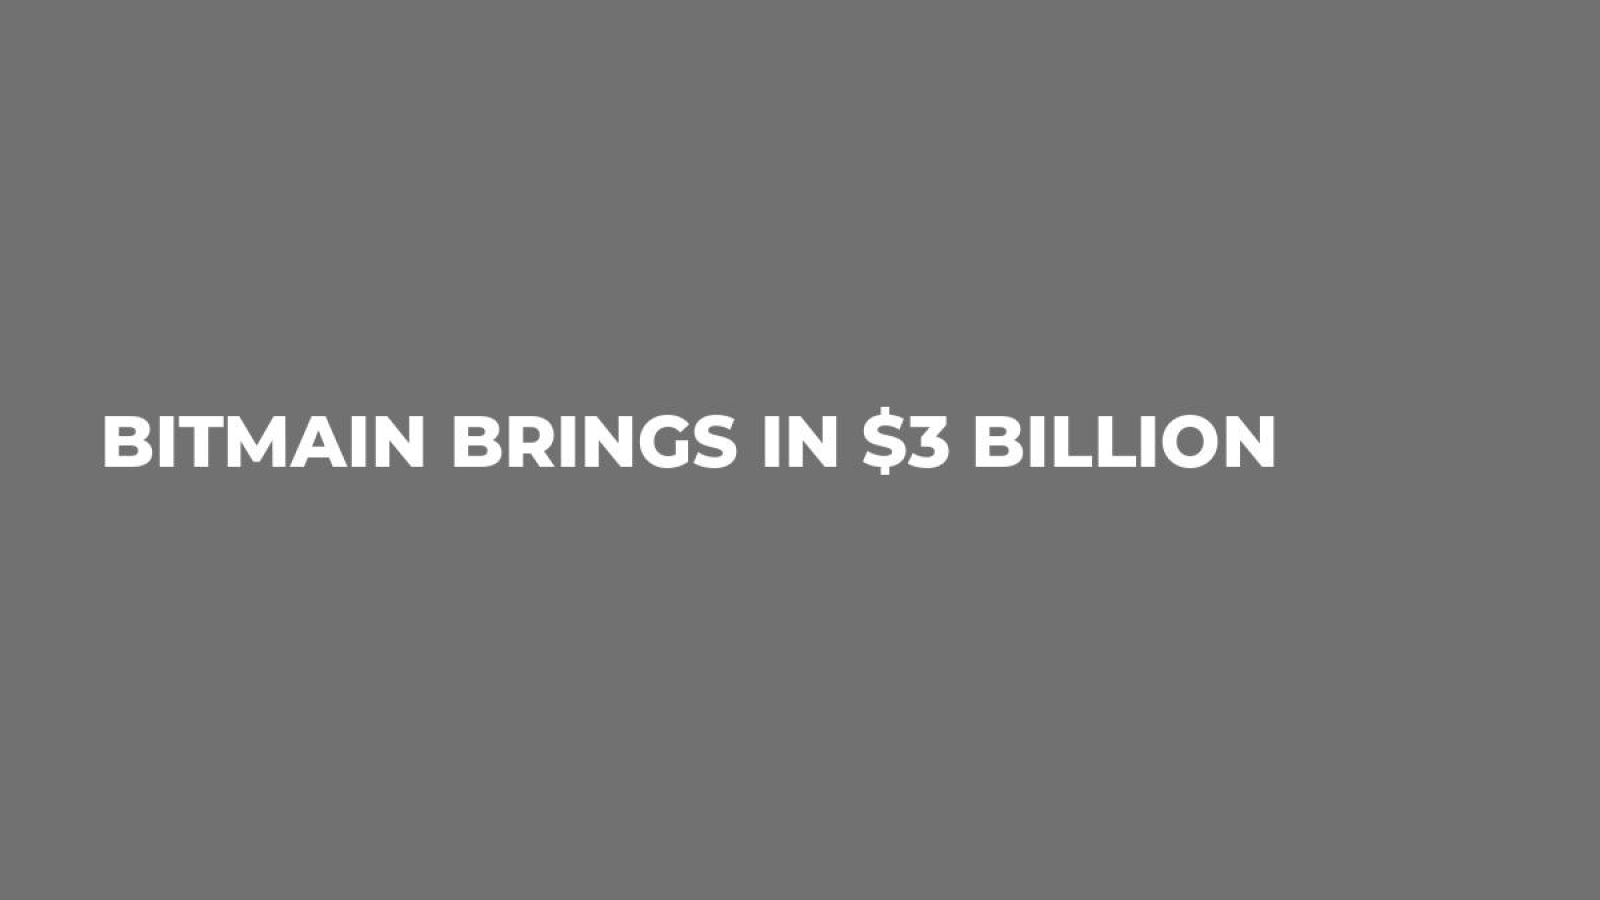 Bitmain Brings in $3 Billion